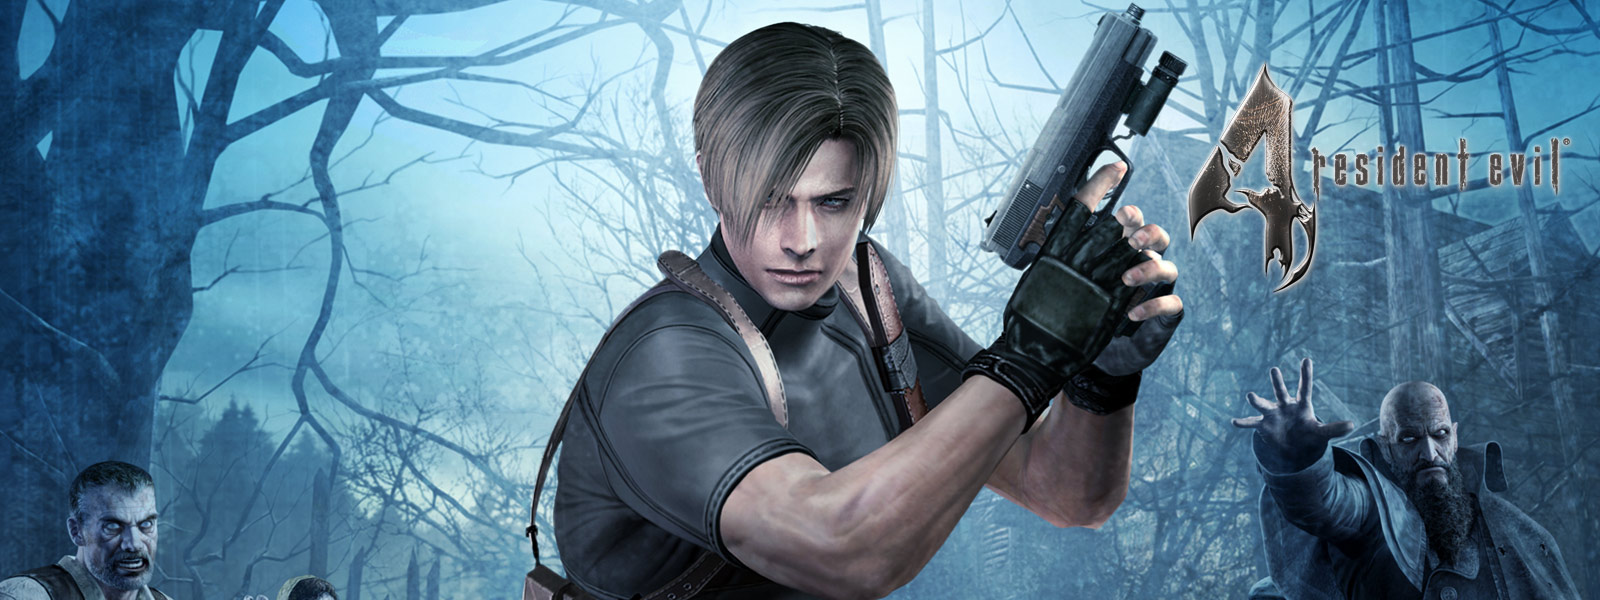 Resident Evil 4，角色拿著手槍在殭屍圍繞的陰暗樹林裡